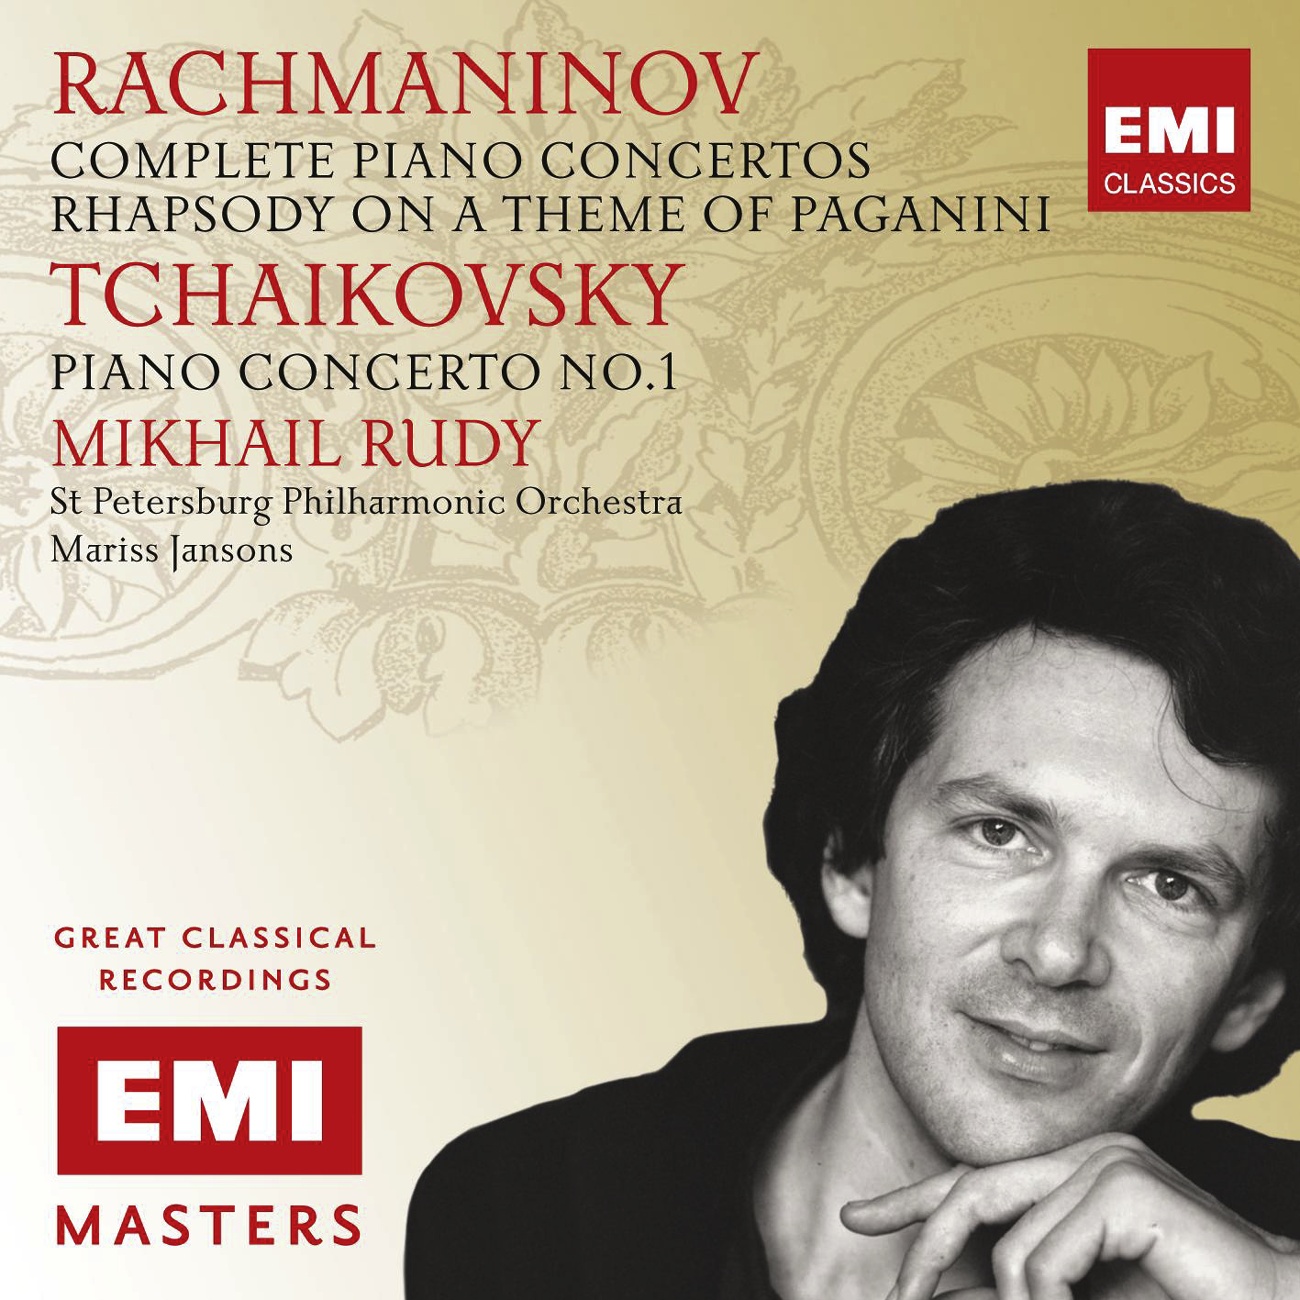 Rhapsody on a Theme of Paganini: Variation XVIII - Andante cantabile